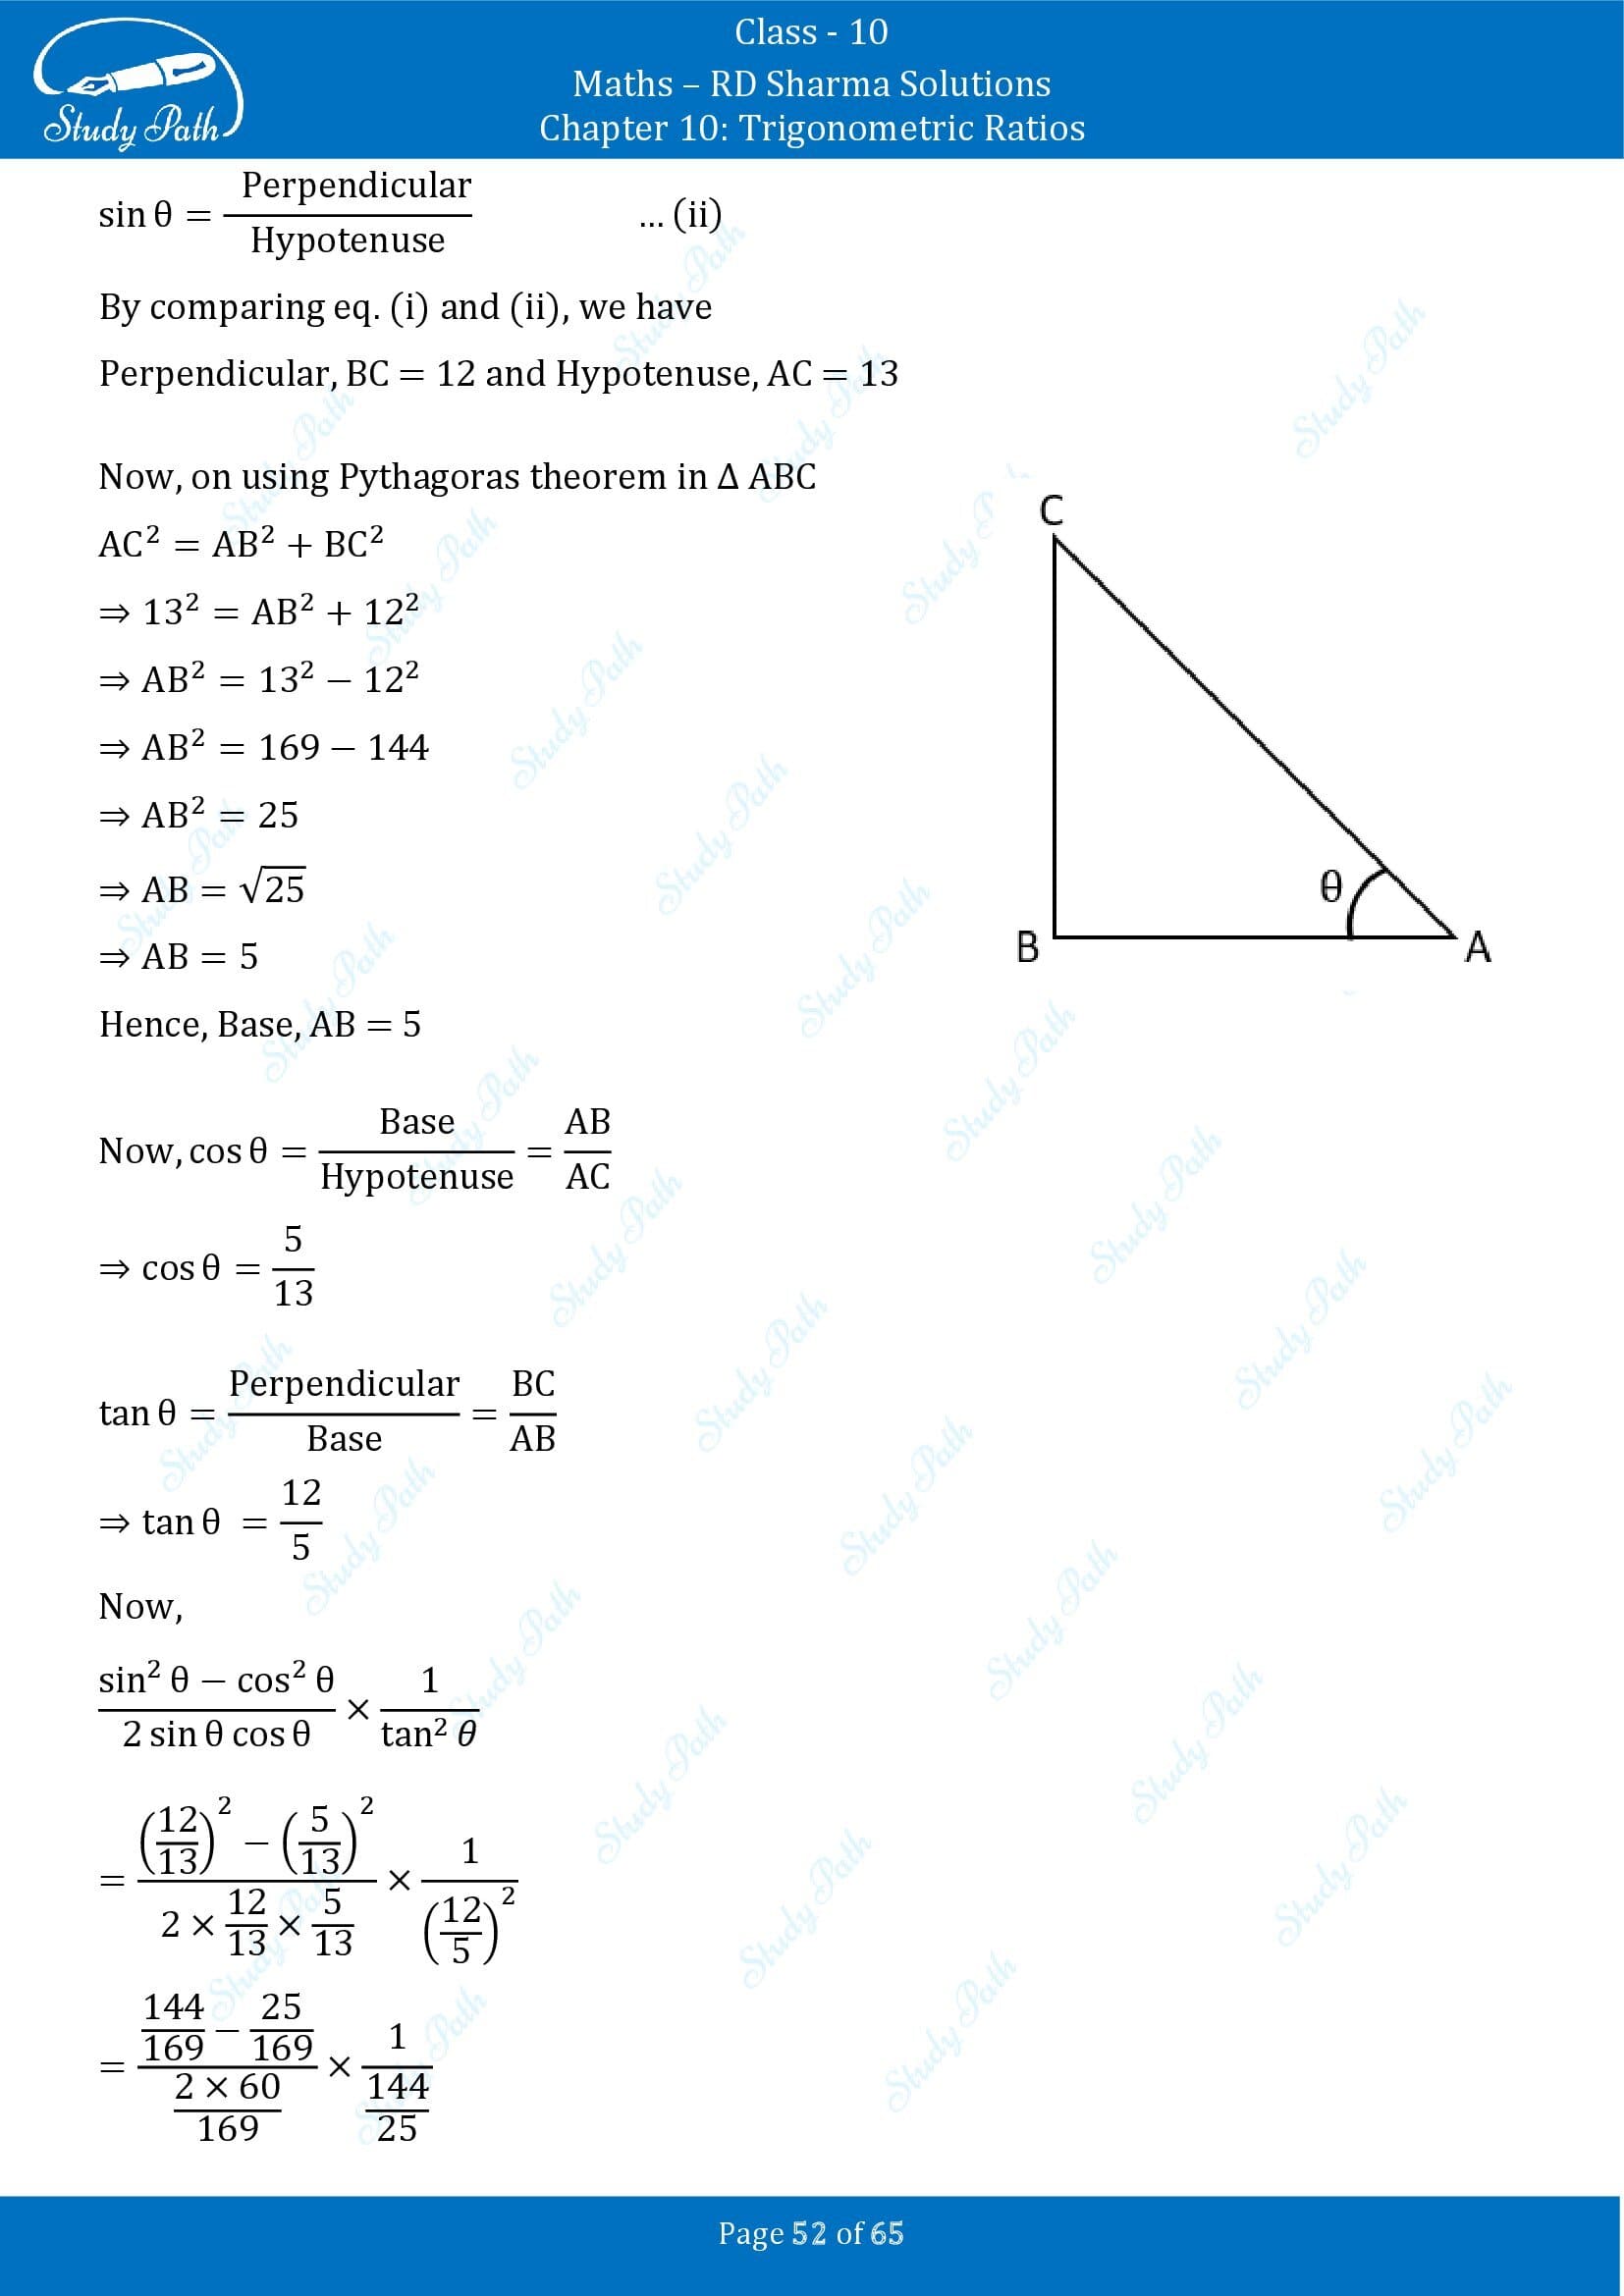 RD Sharma Solutions Class 10 Chapter 10 Trigonometric Ratios Exercise 10.1 00052